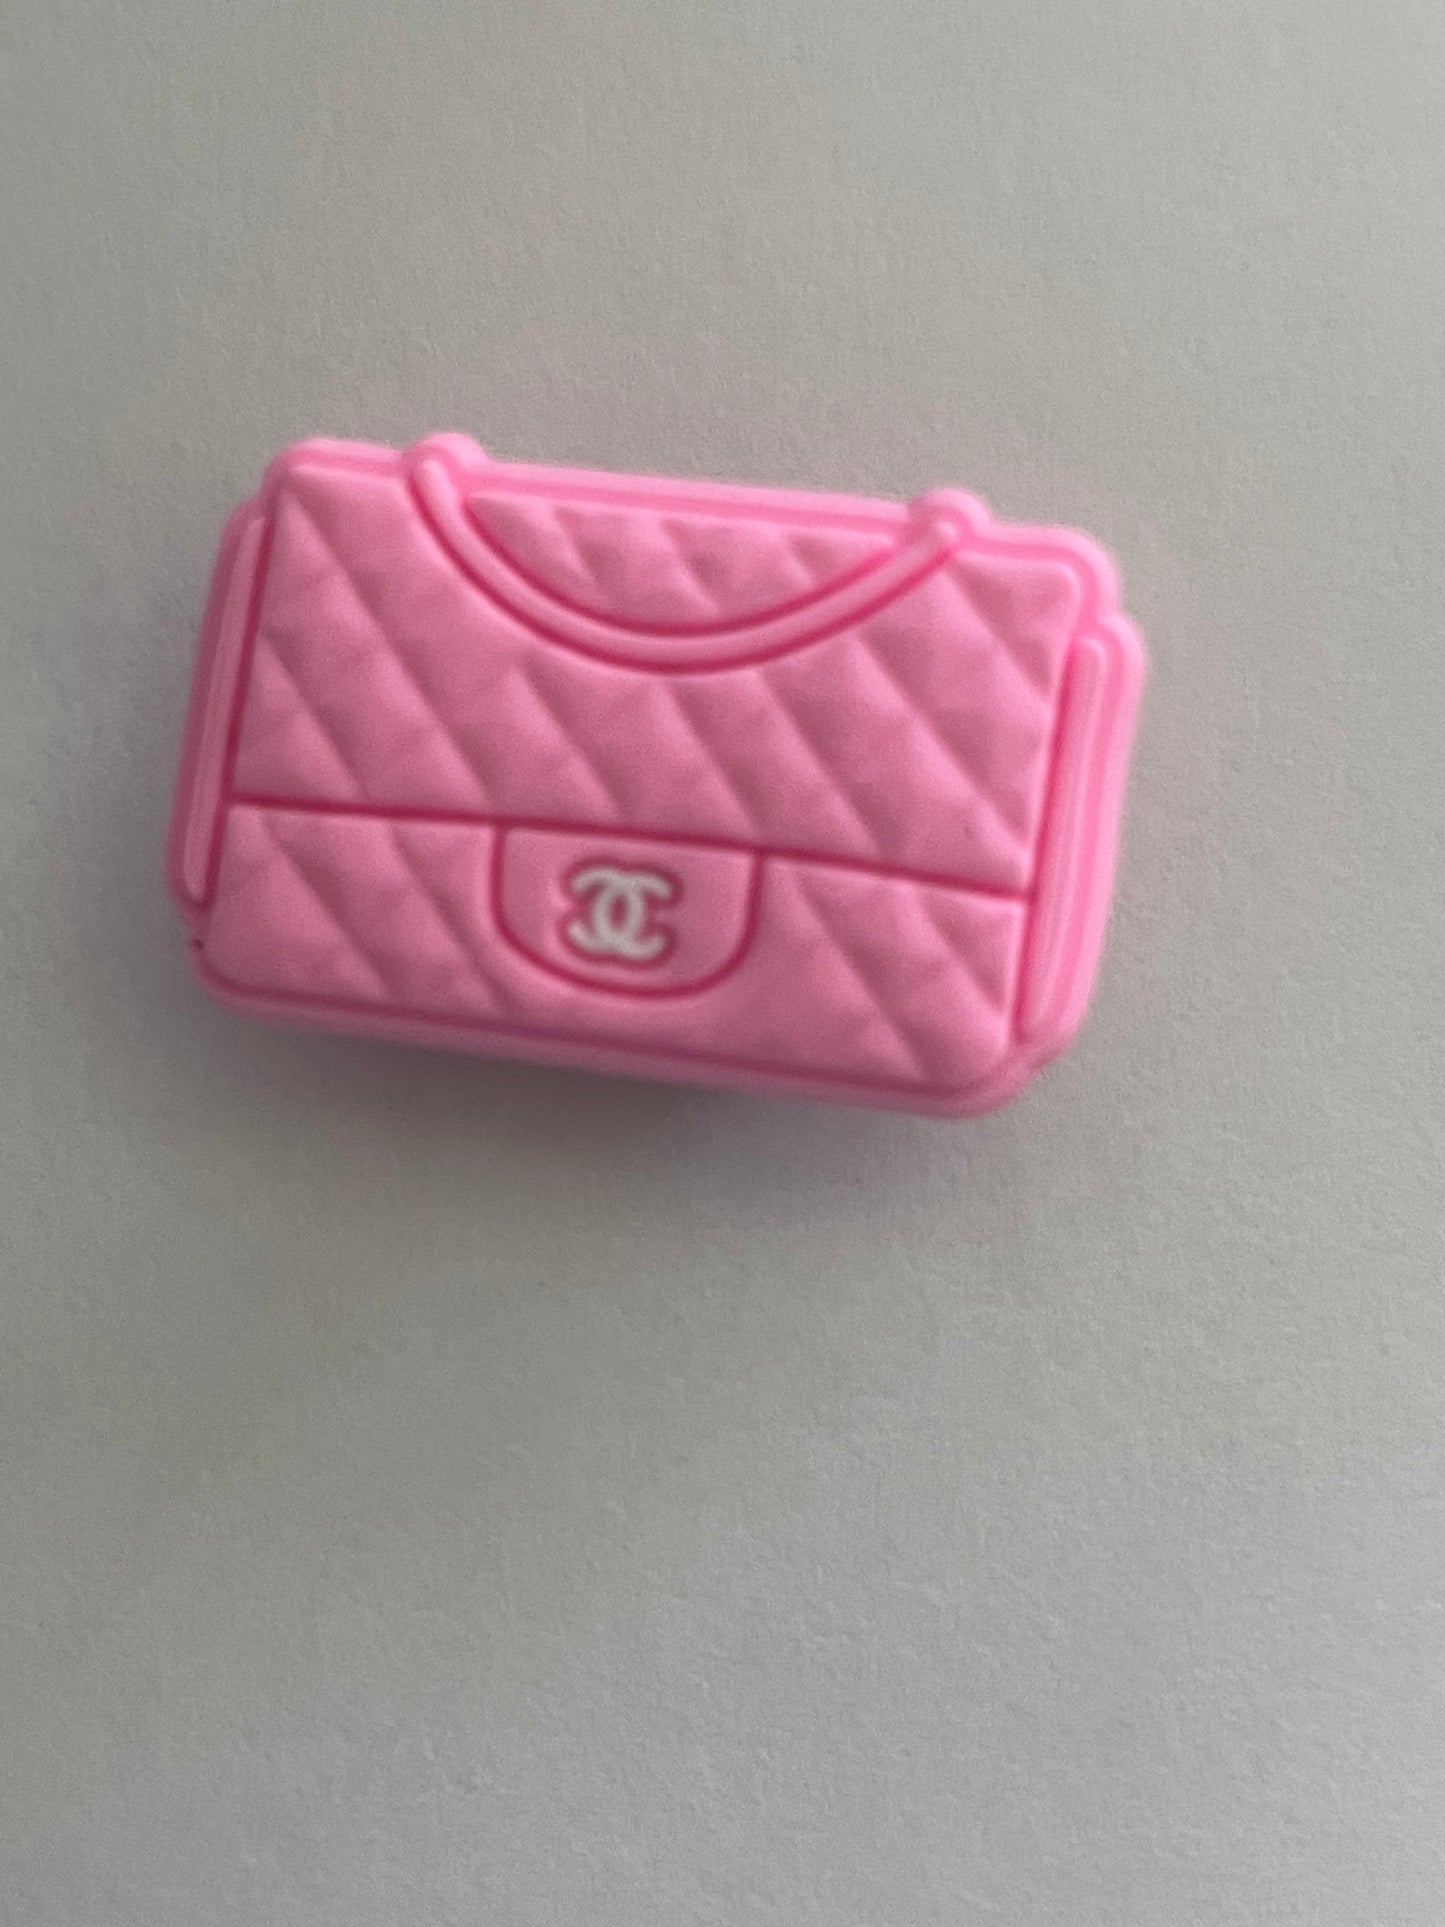 cc pink purse Shoe Charm